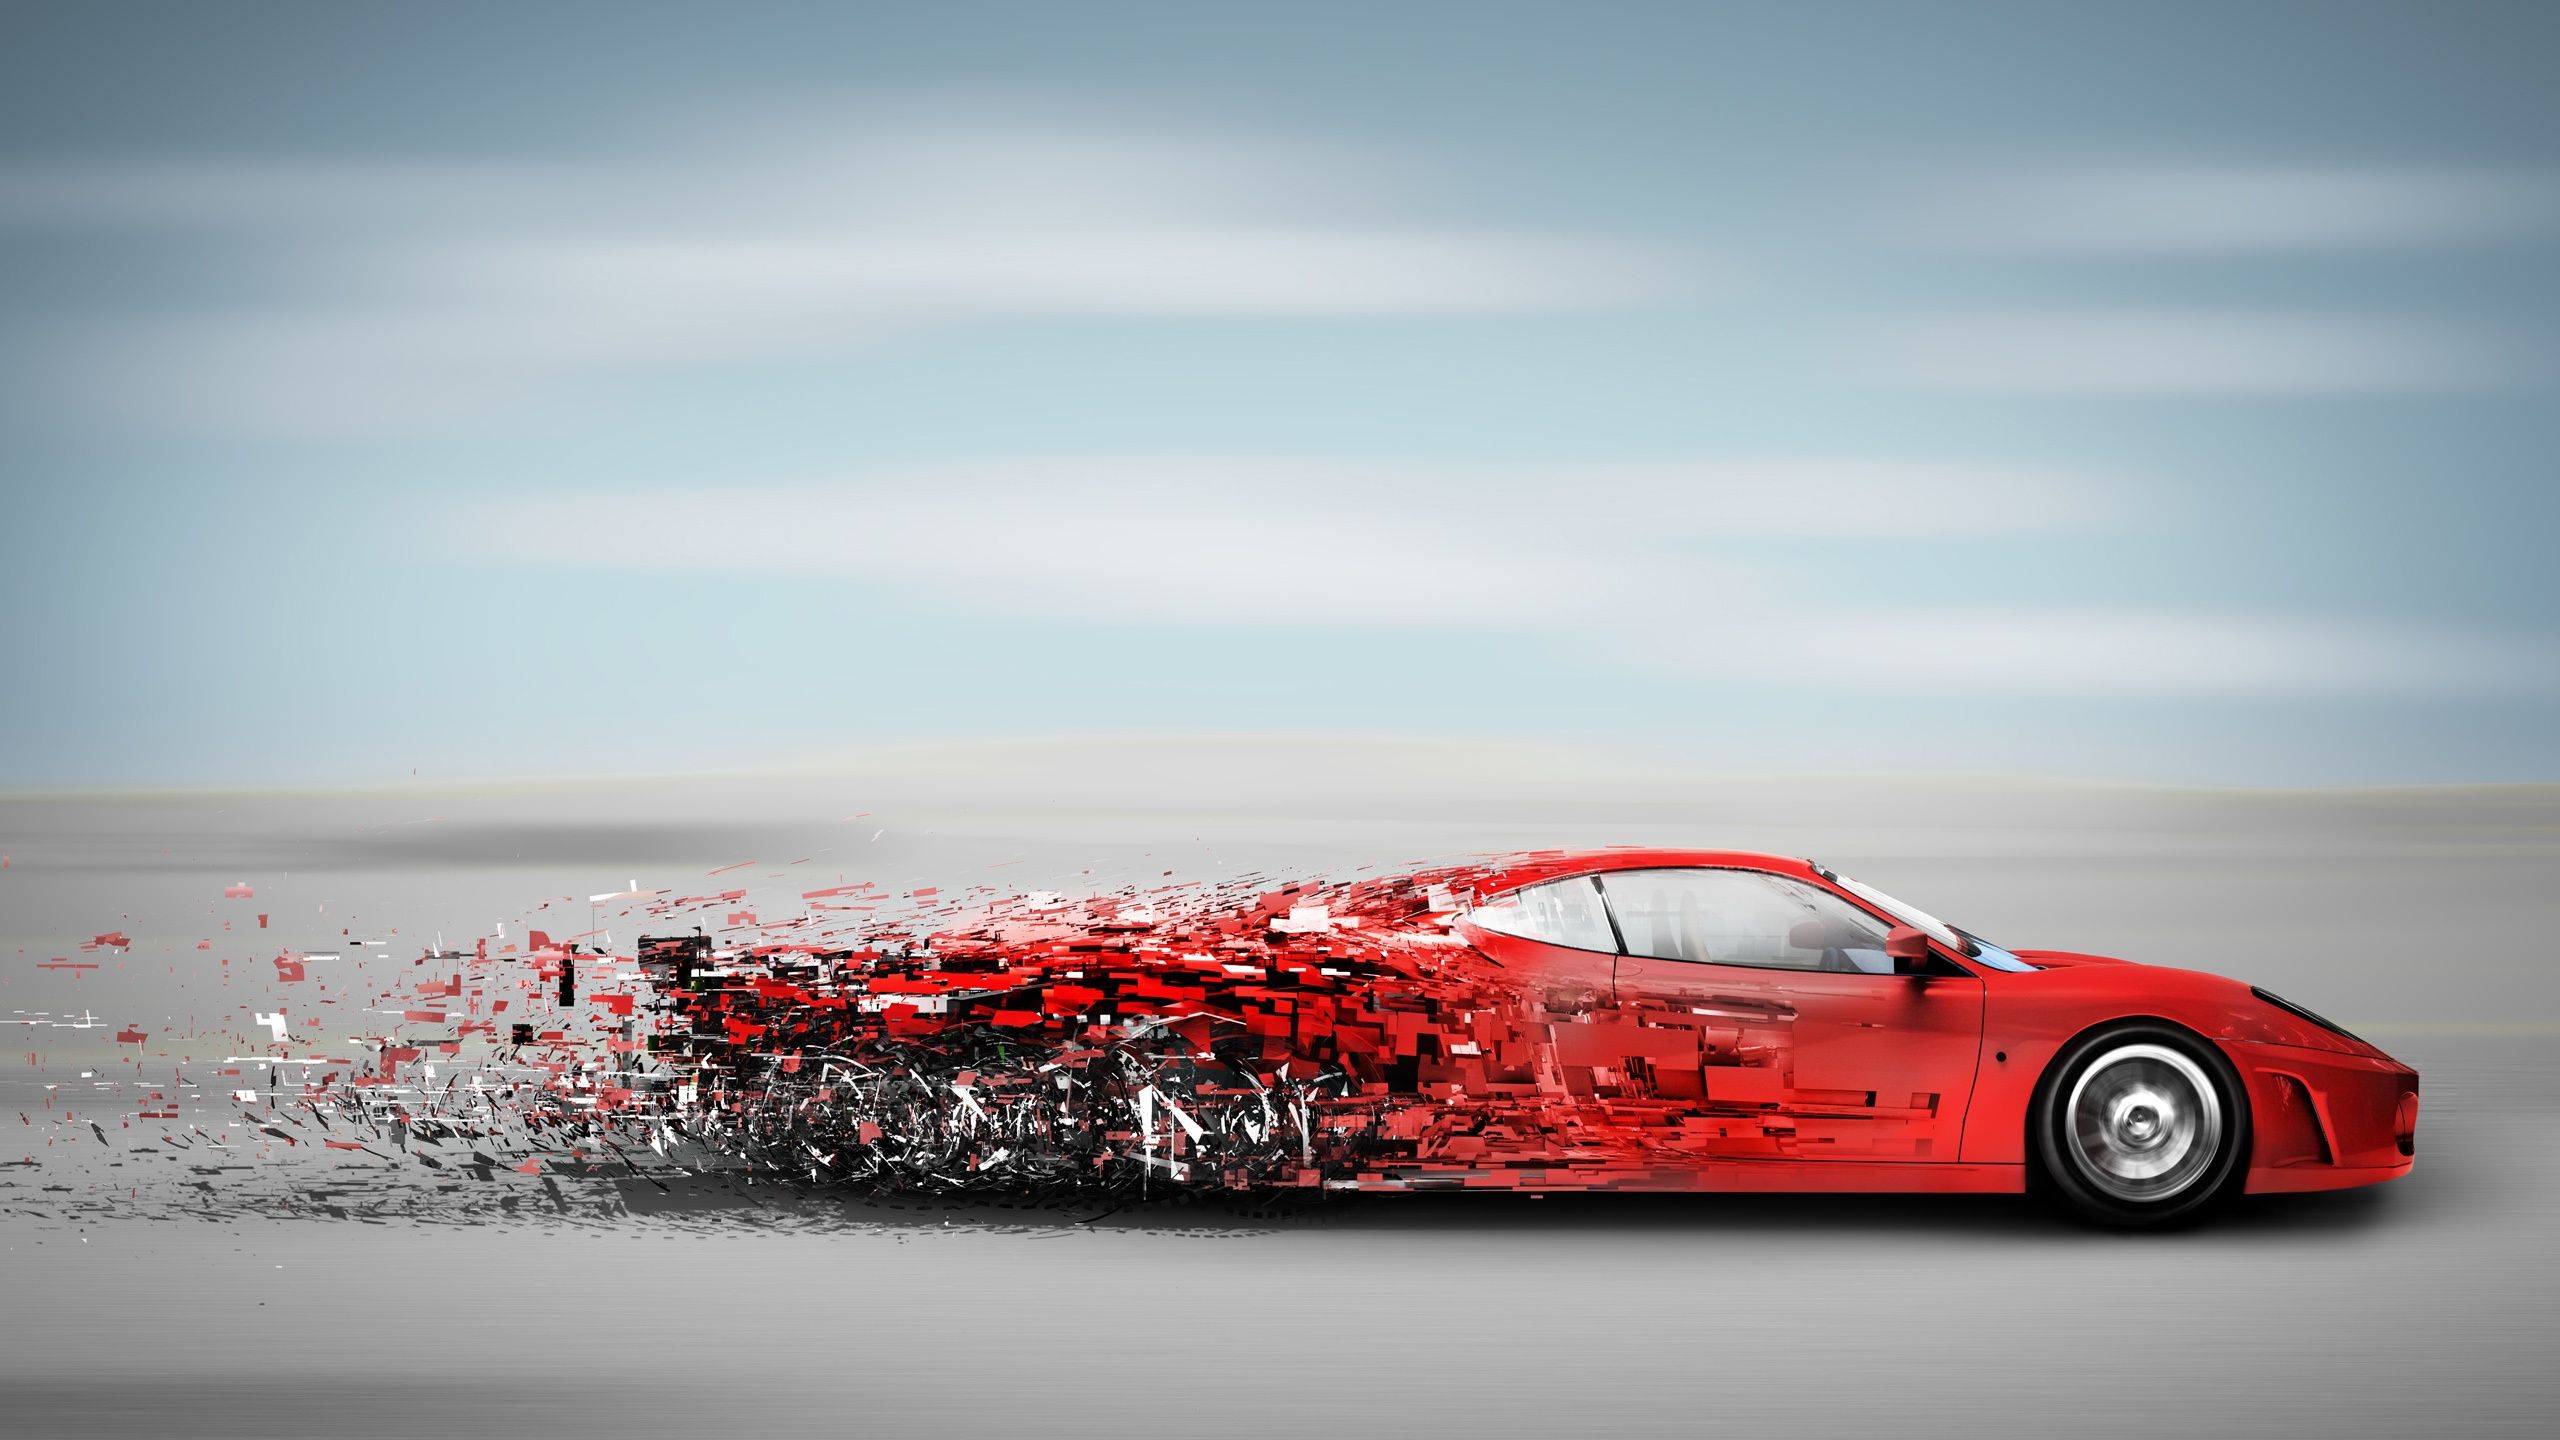 Wallpaper Red Sports Car In High Speed Running, Debris Creative